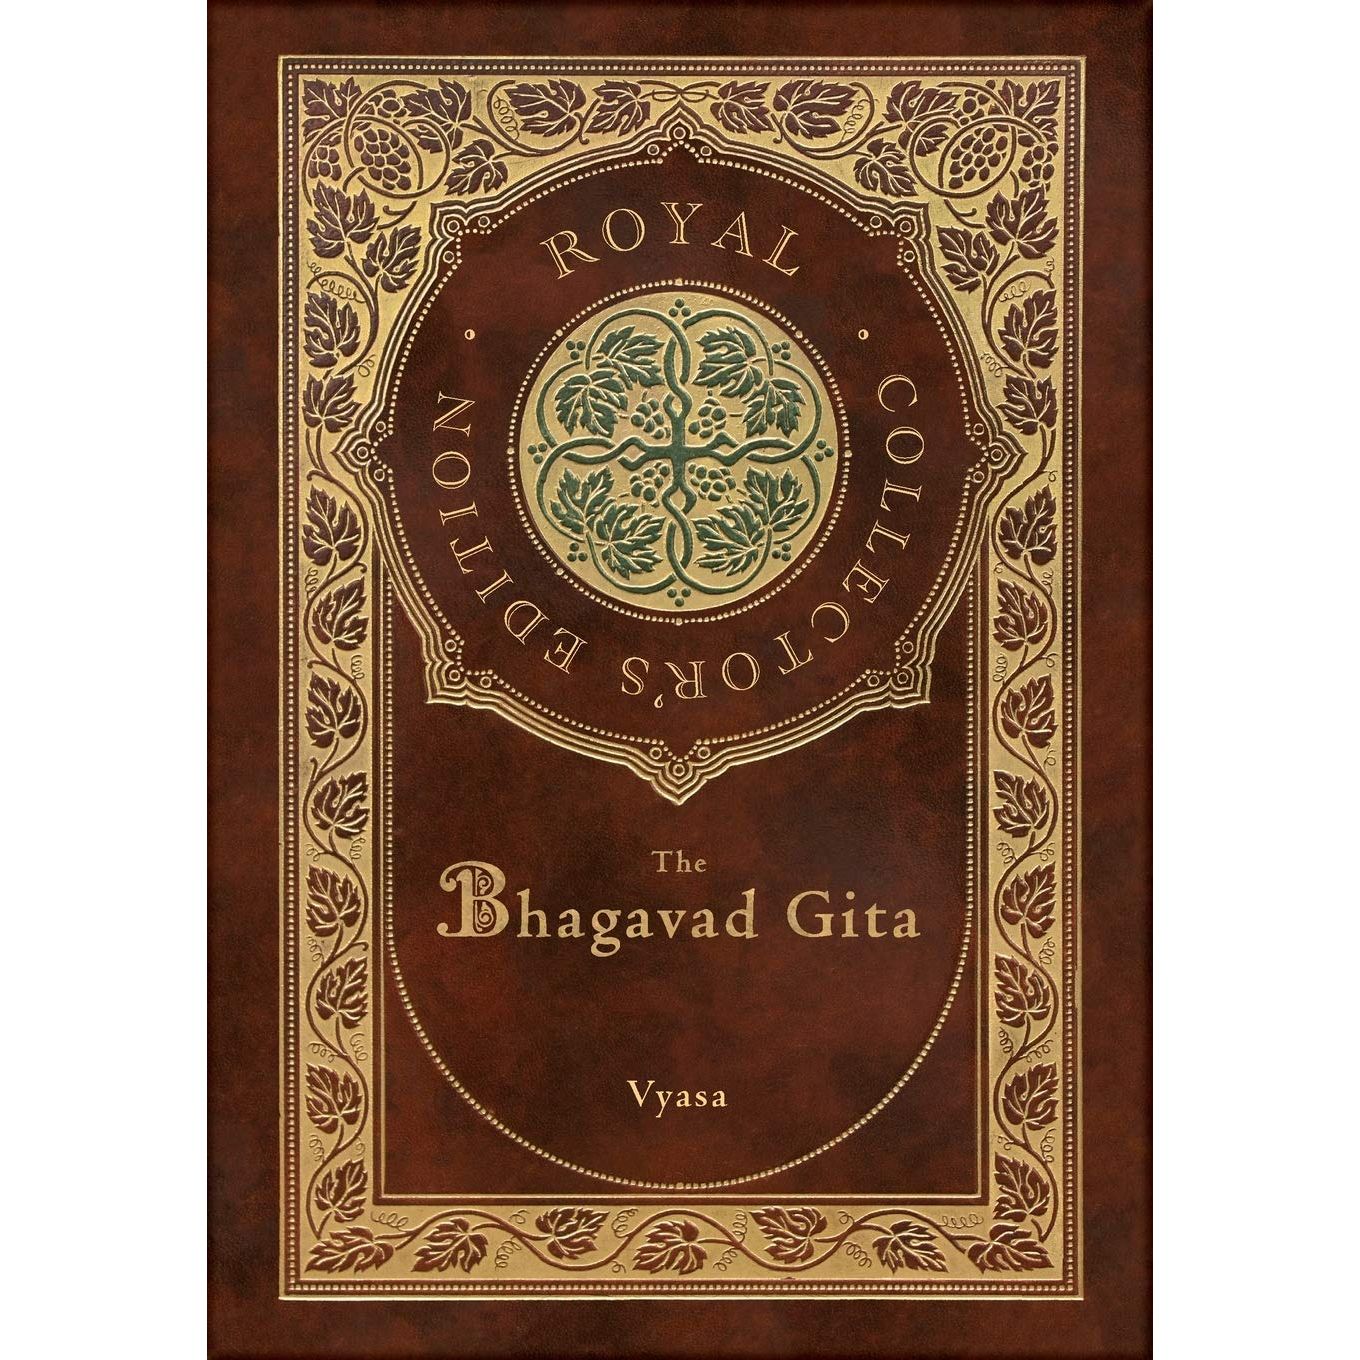 The Bhagavad Gita ~ Royal Collector's Edition